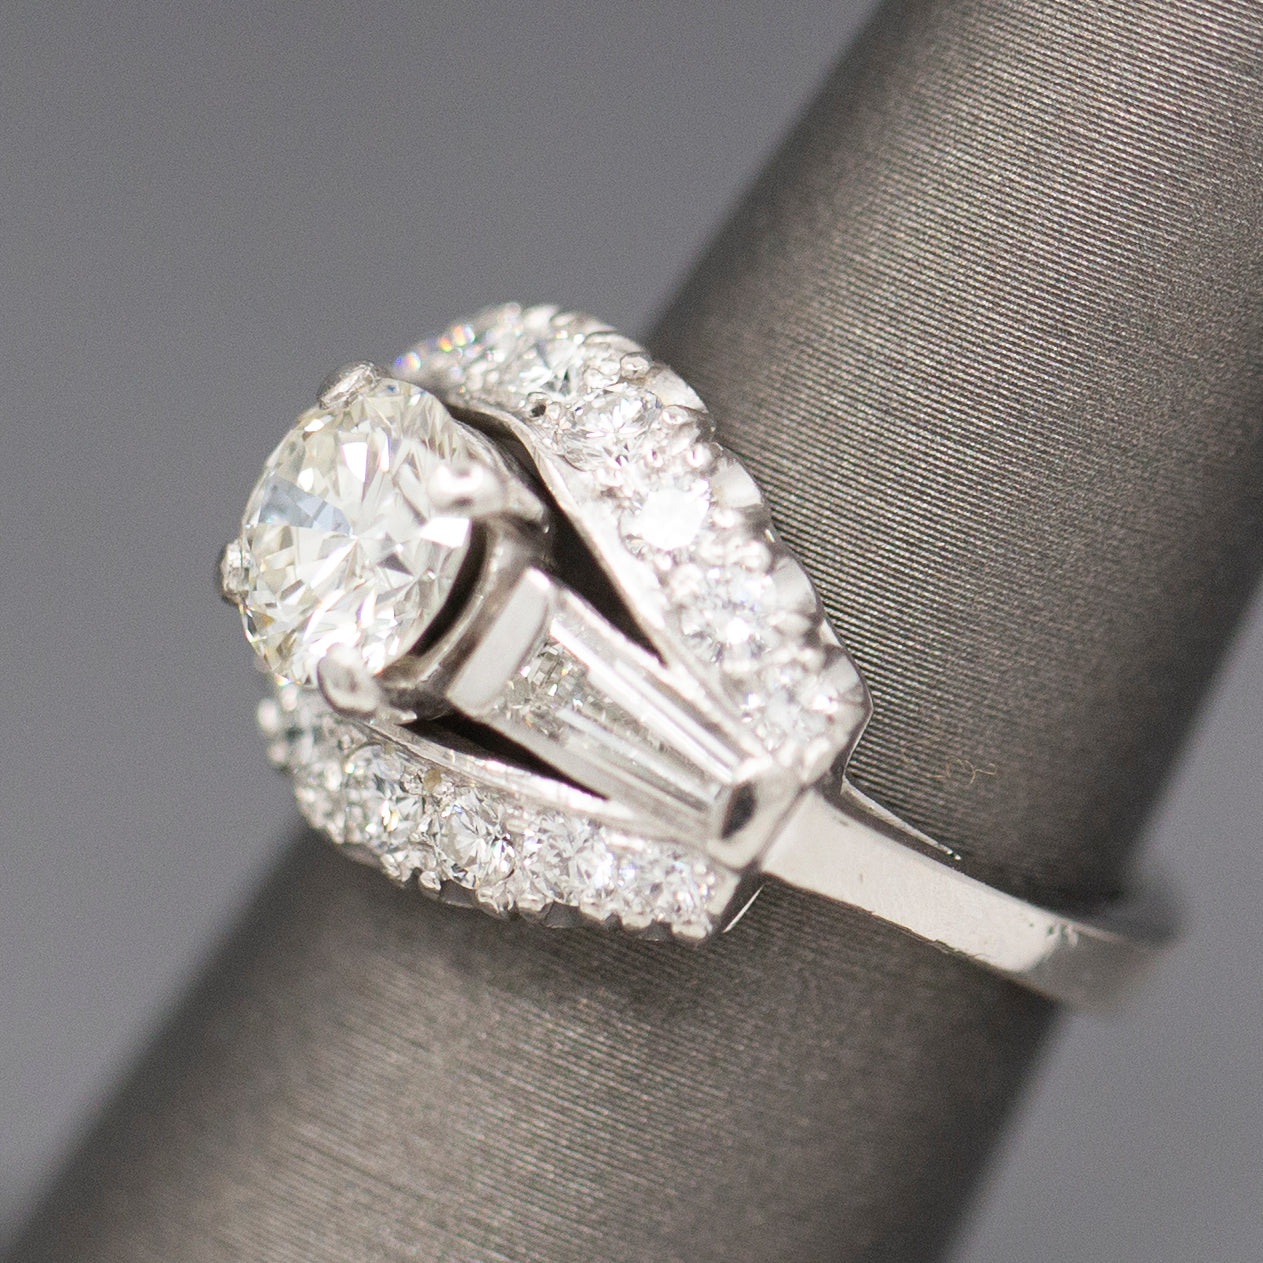 Vintage Mid-Century Round Brilliant Cut and Baguette Diamond Engagement Ring in Platinum